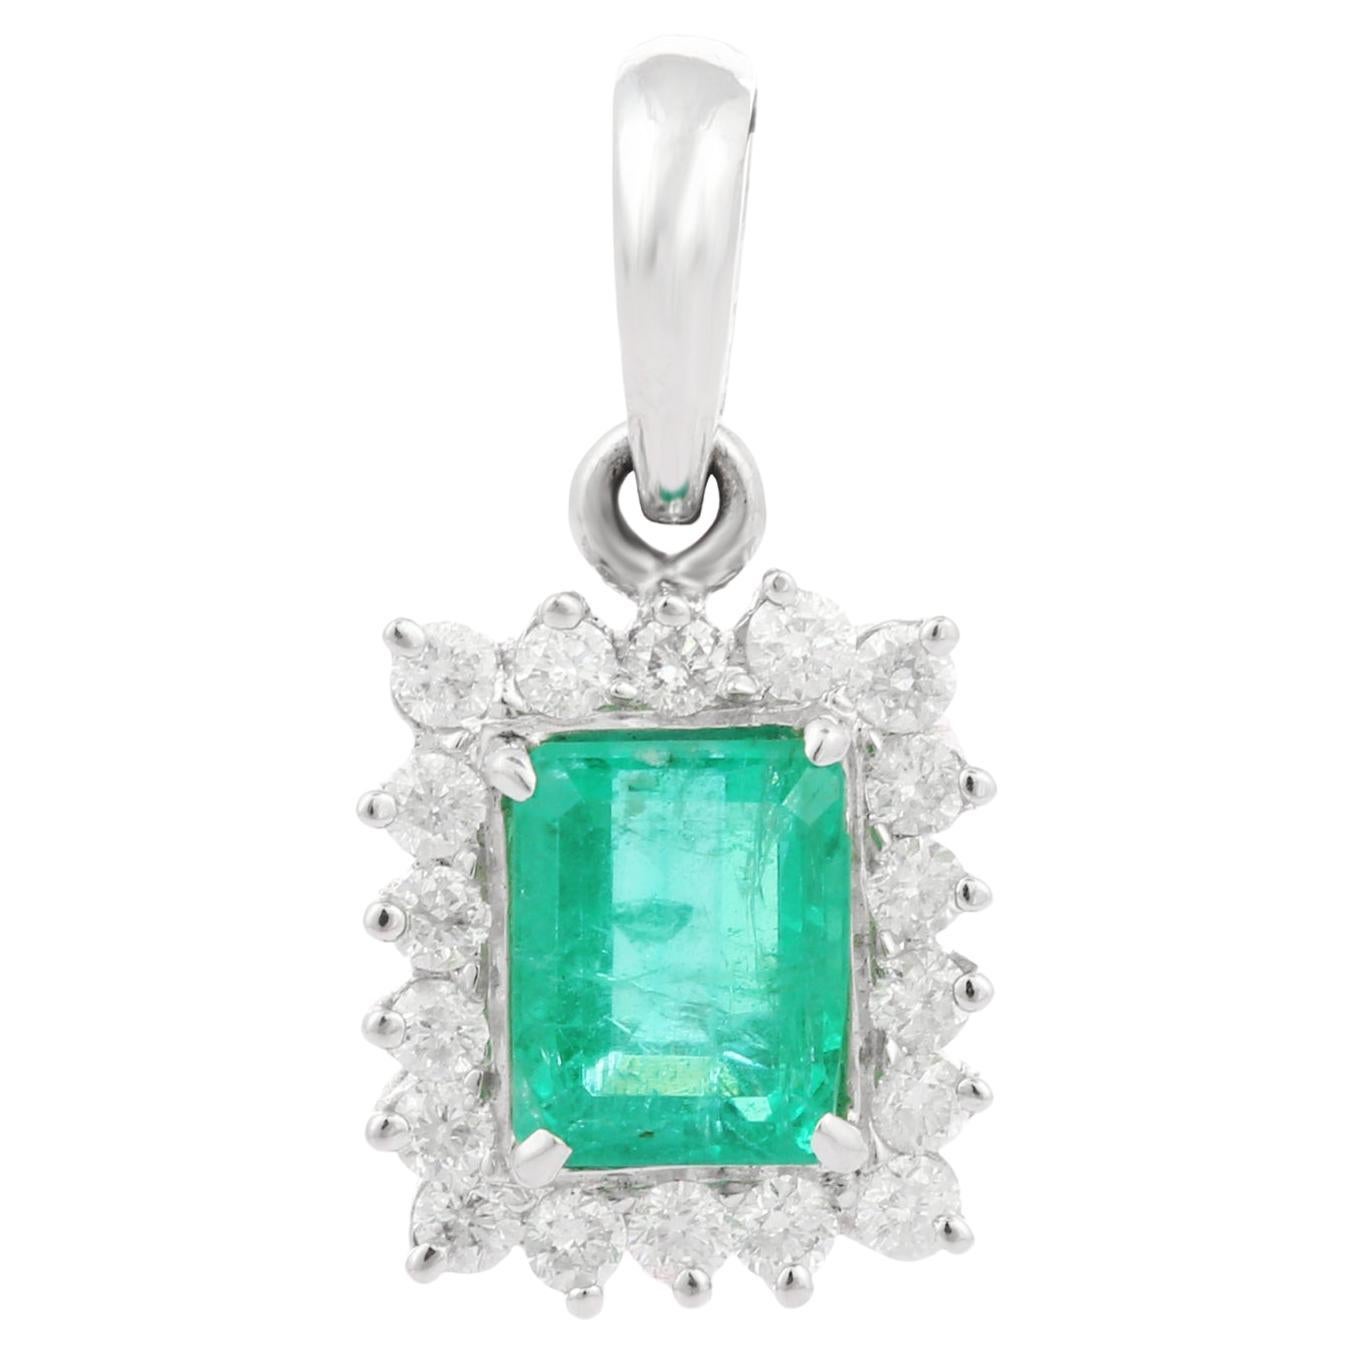 1.68 Carat Octagon Cut Emerald Pendant with Diamonds in 18K White Gold